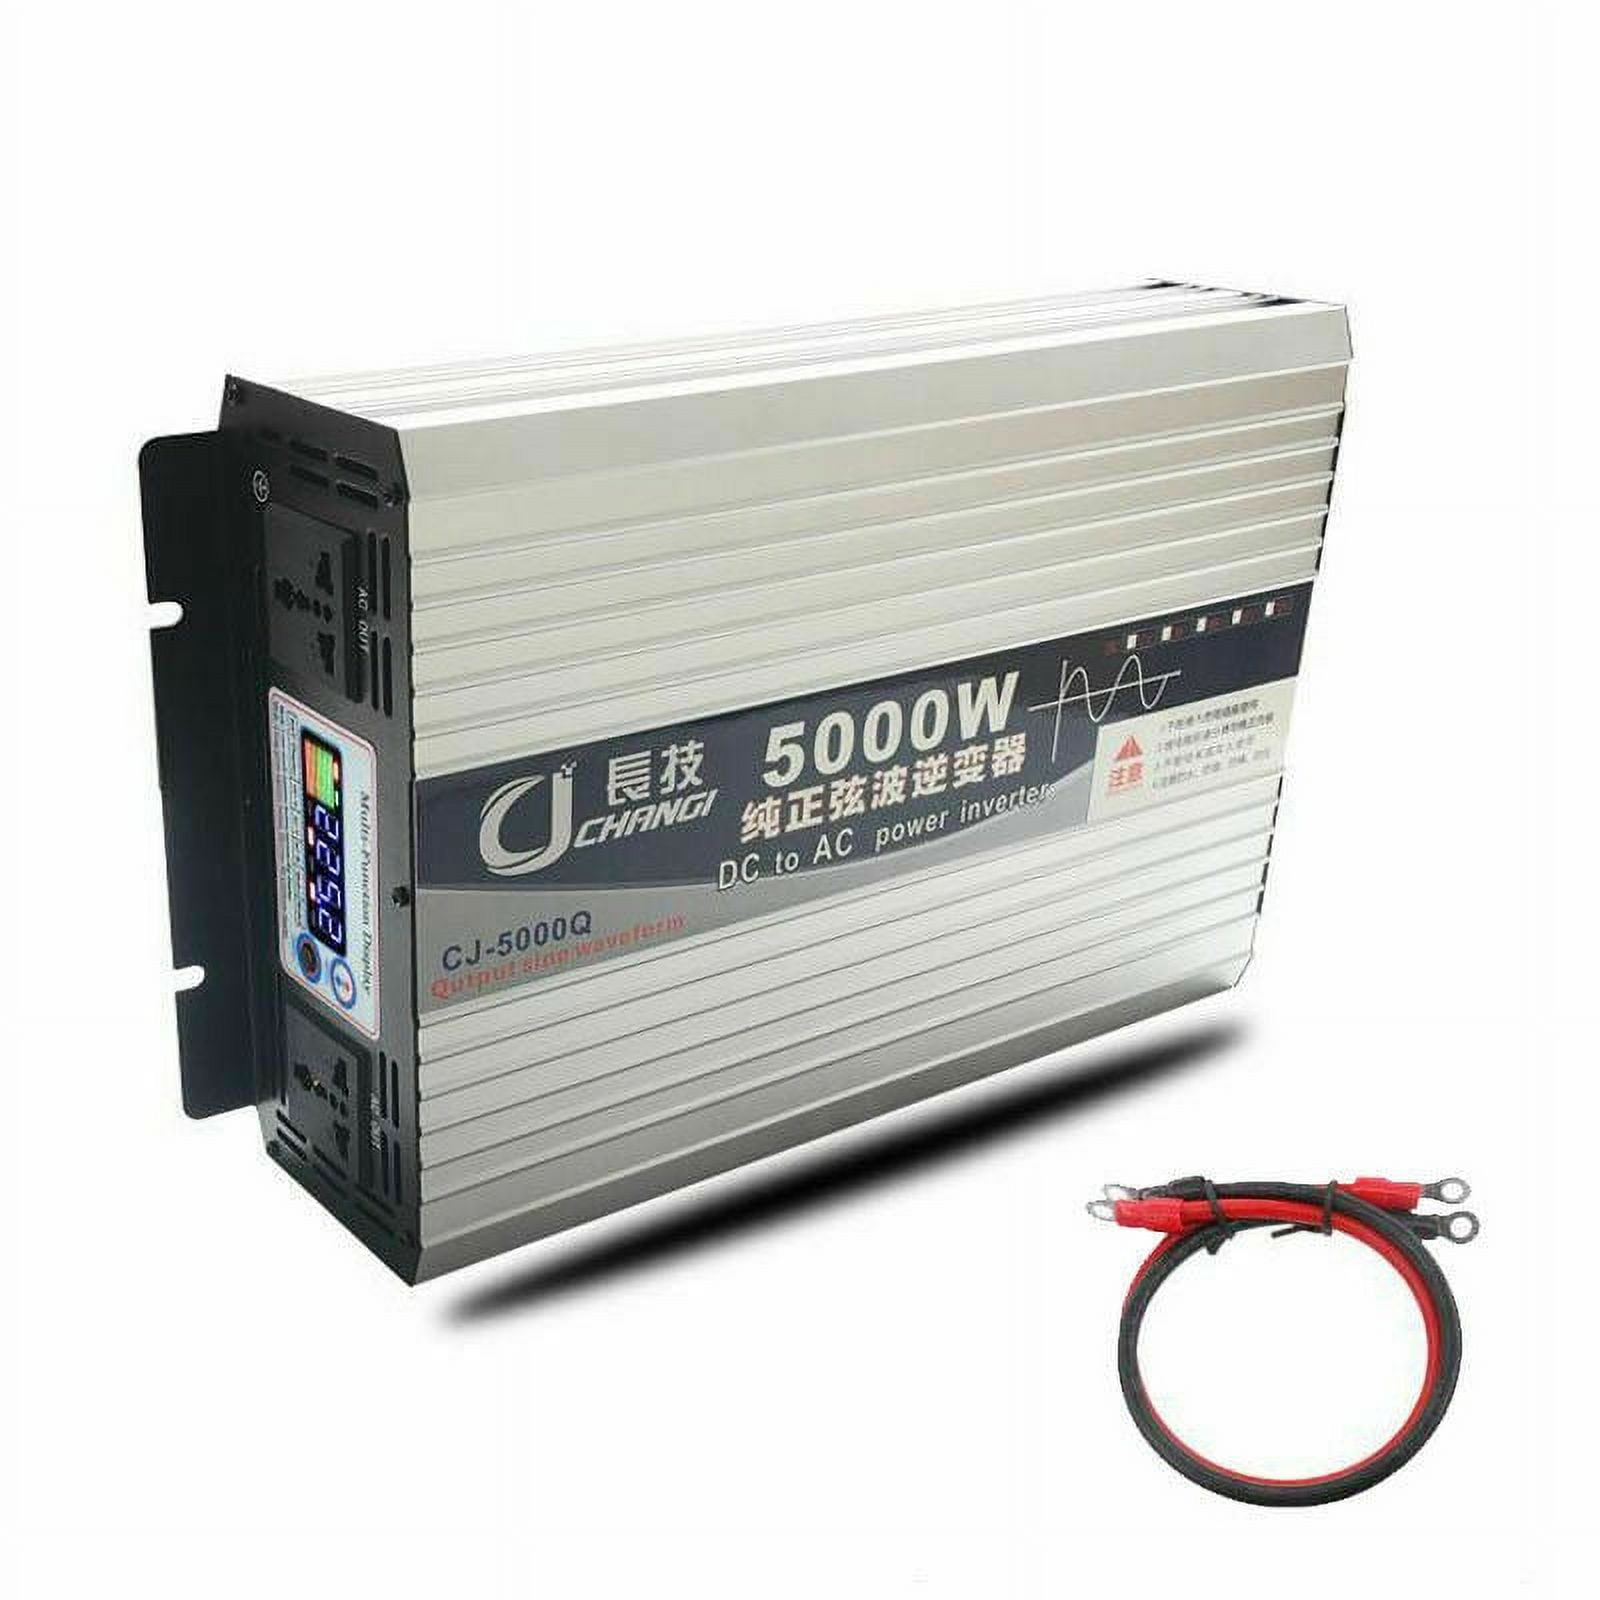 Power Inverter Edecoa Dc Ac, Edecoa Pure Sine Wave 5000